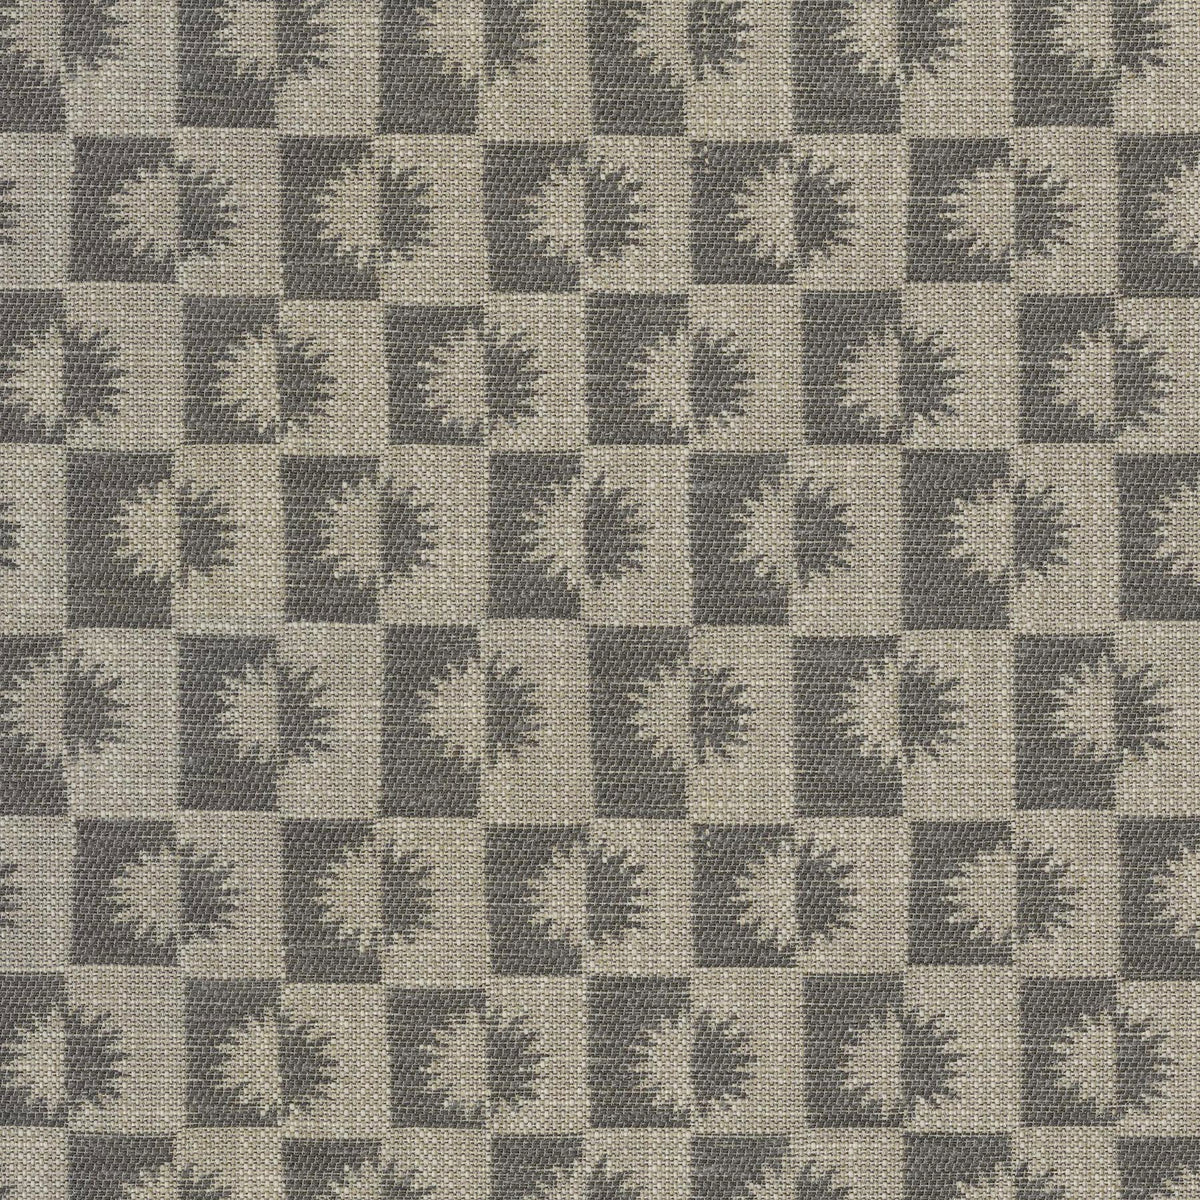 Elana Gabrielle Sunrise - Charcoal 140012 Fabric Swatch